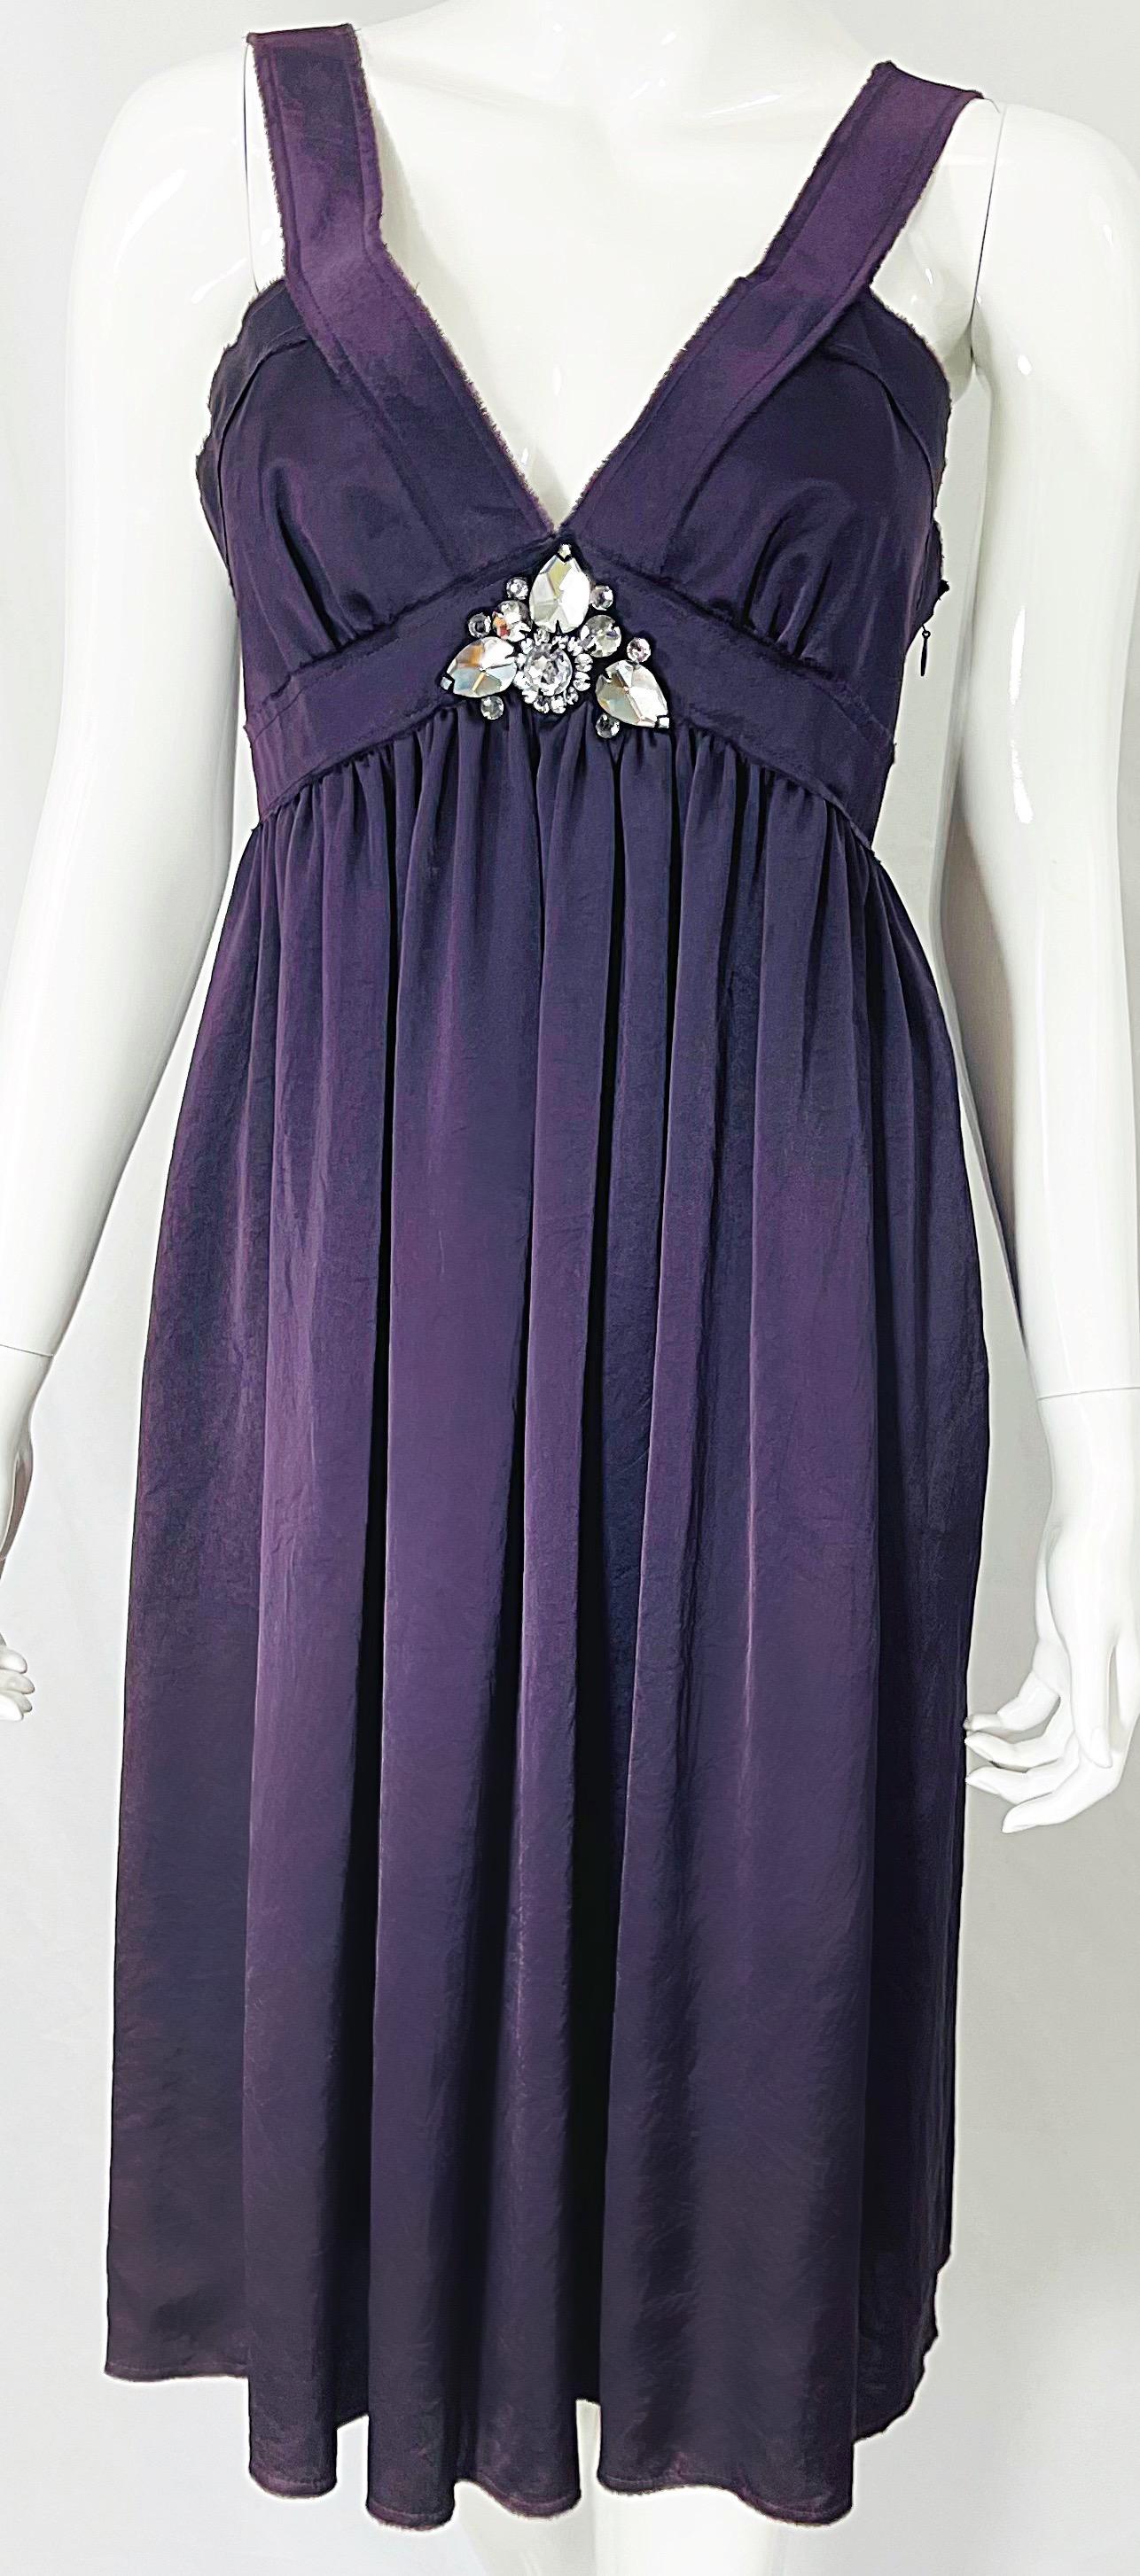 Lanvin S/S 2007 Alber Elbaz Sz 38 Purple Rhinestone Encrusted Empire Waist Dress For Sale 2